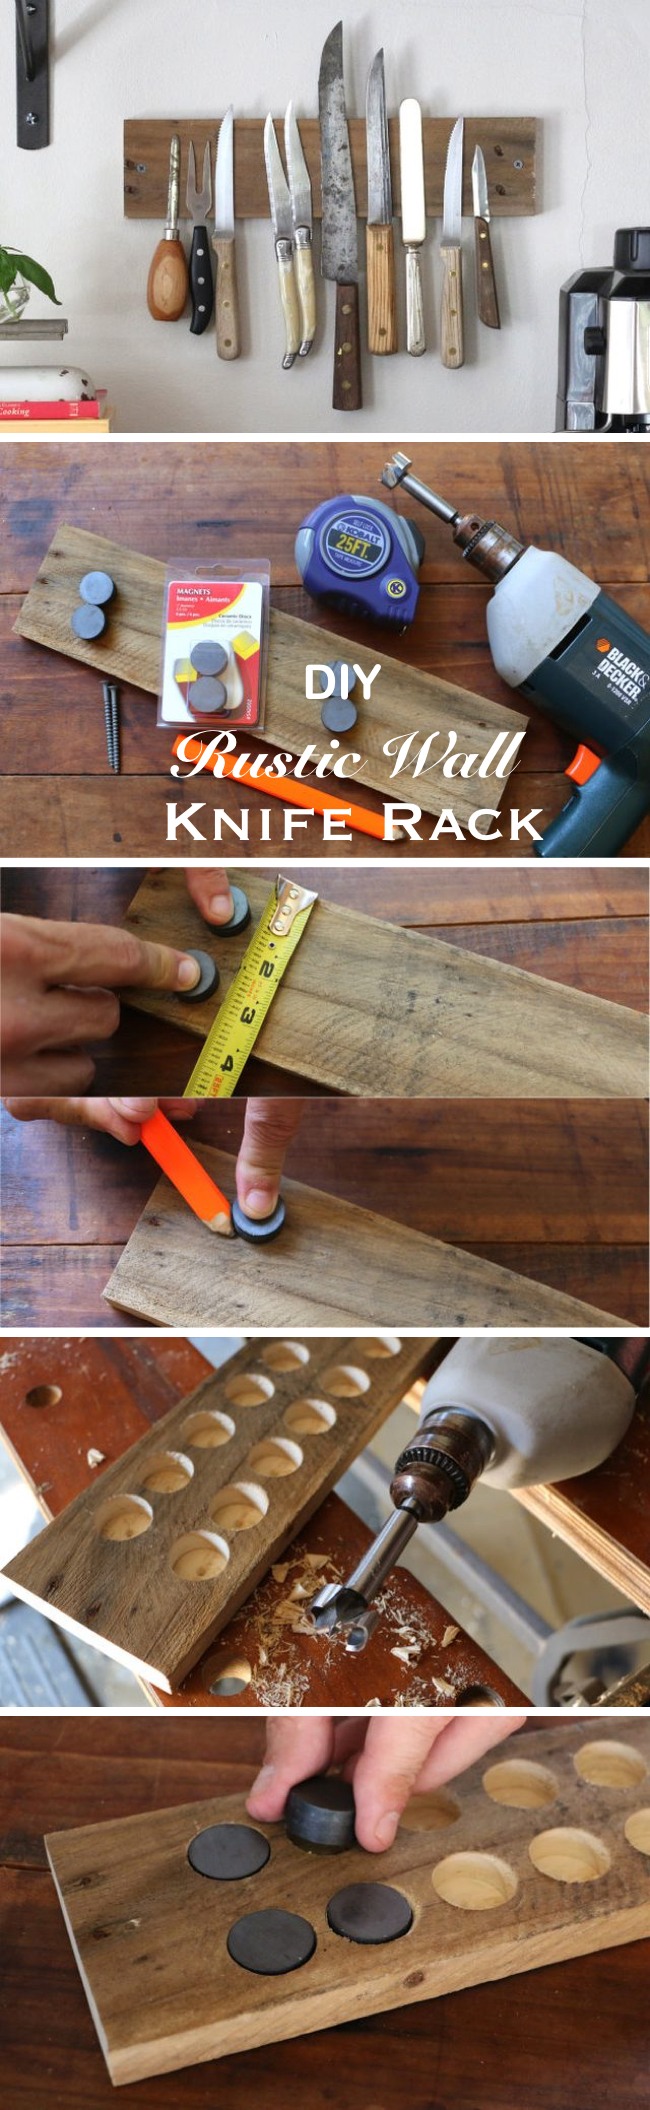 DIY Rustic Wall Knife Rack